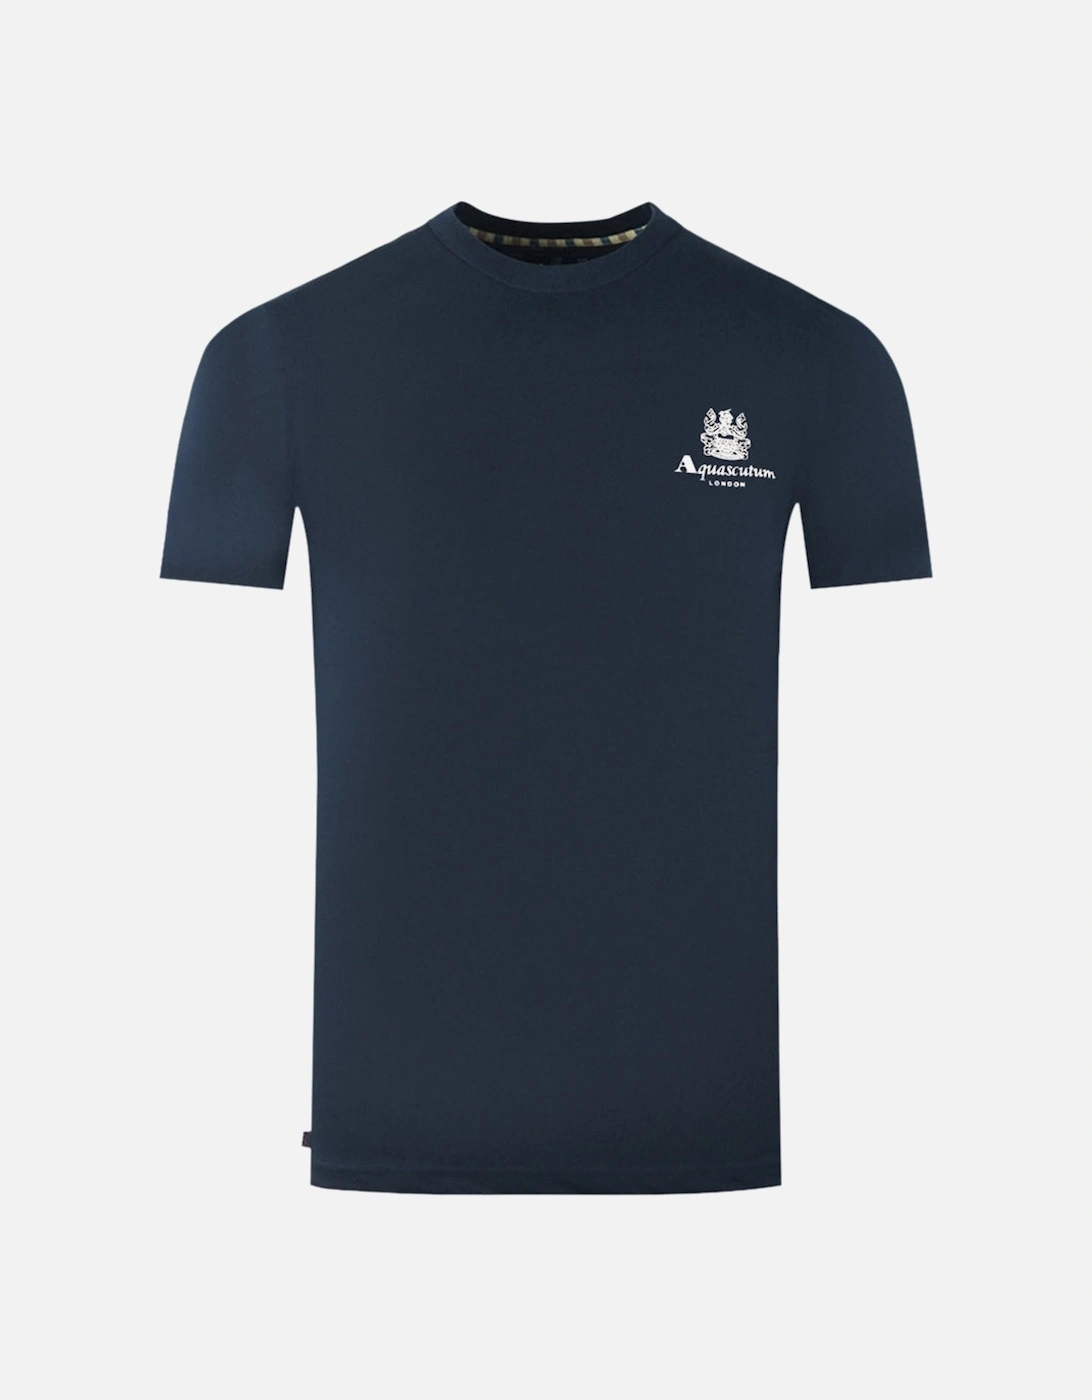 London Aldis Brand Logo On Chest Navy Blue T-Shirt, 3 of 2